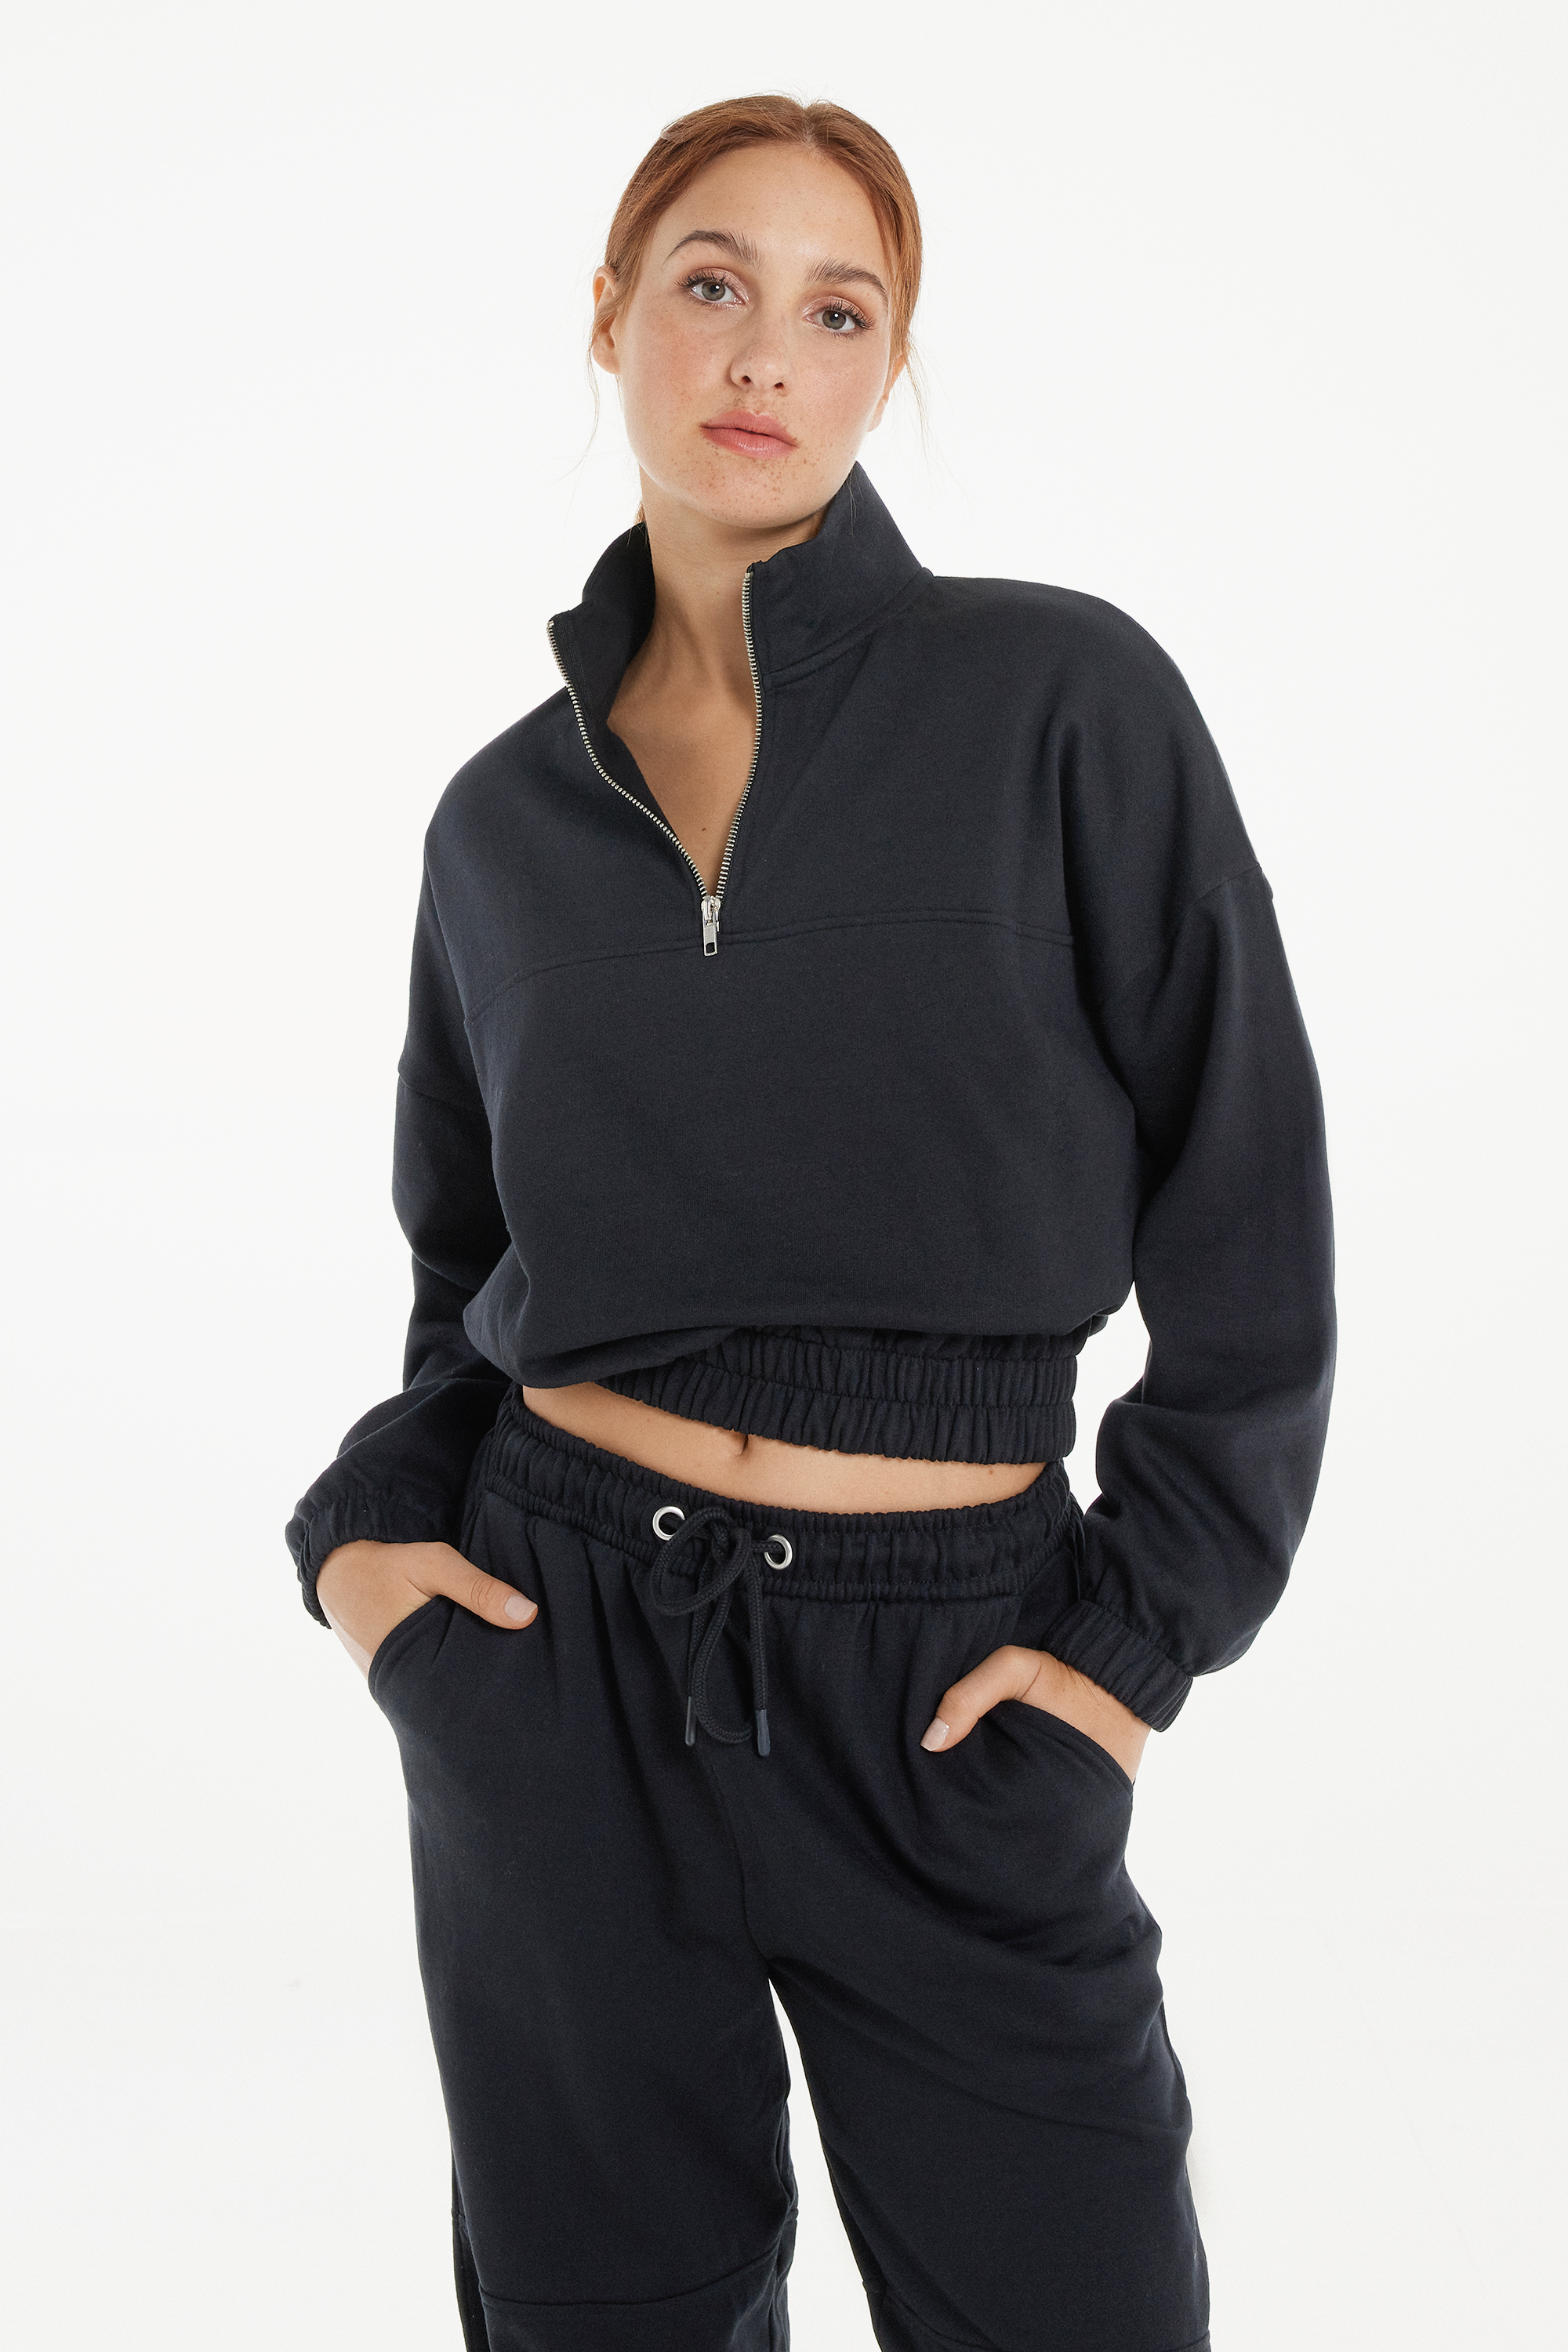 Long-Sleeved Zip-Up Sweatshirt